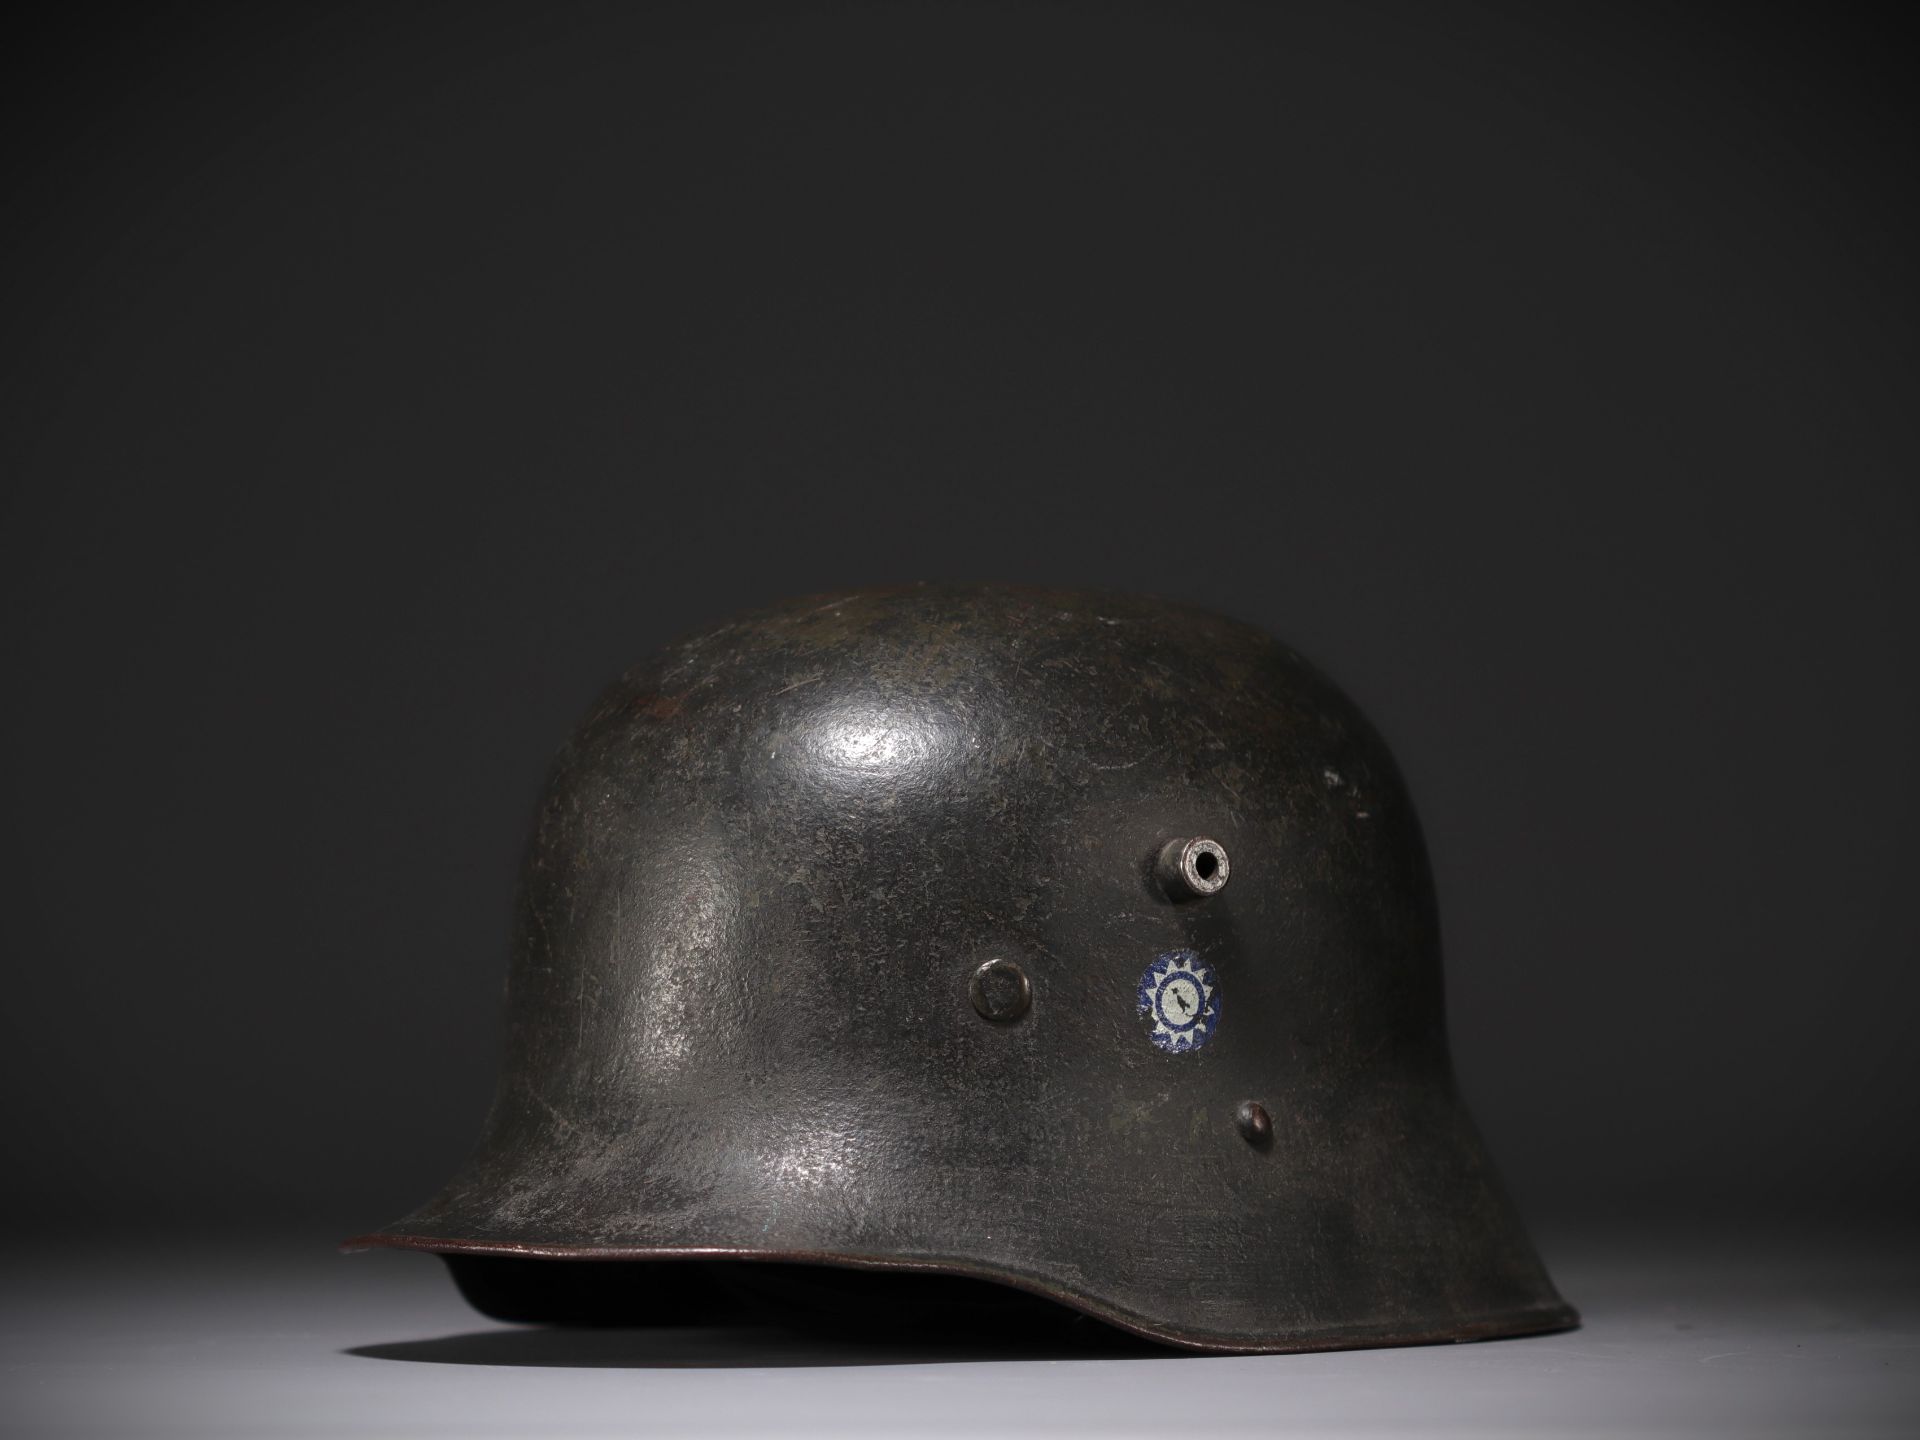 German helmet used by China during Sino-German cooperation.